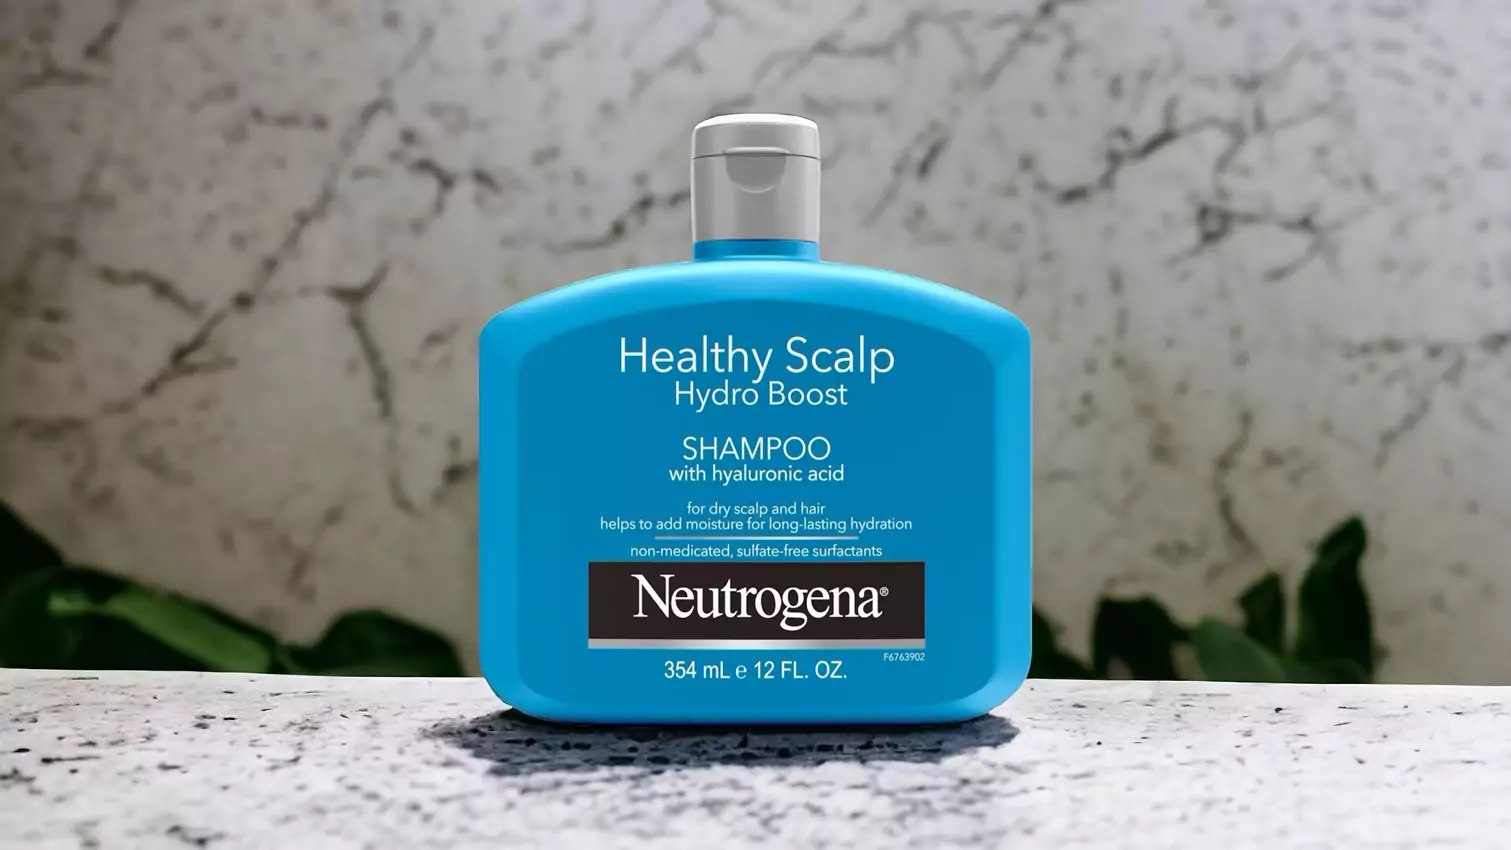 Neutrogena Healthy Scalp Hydro Boost with Hyaluronic Acid Shampoo